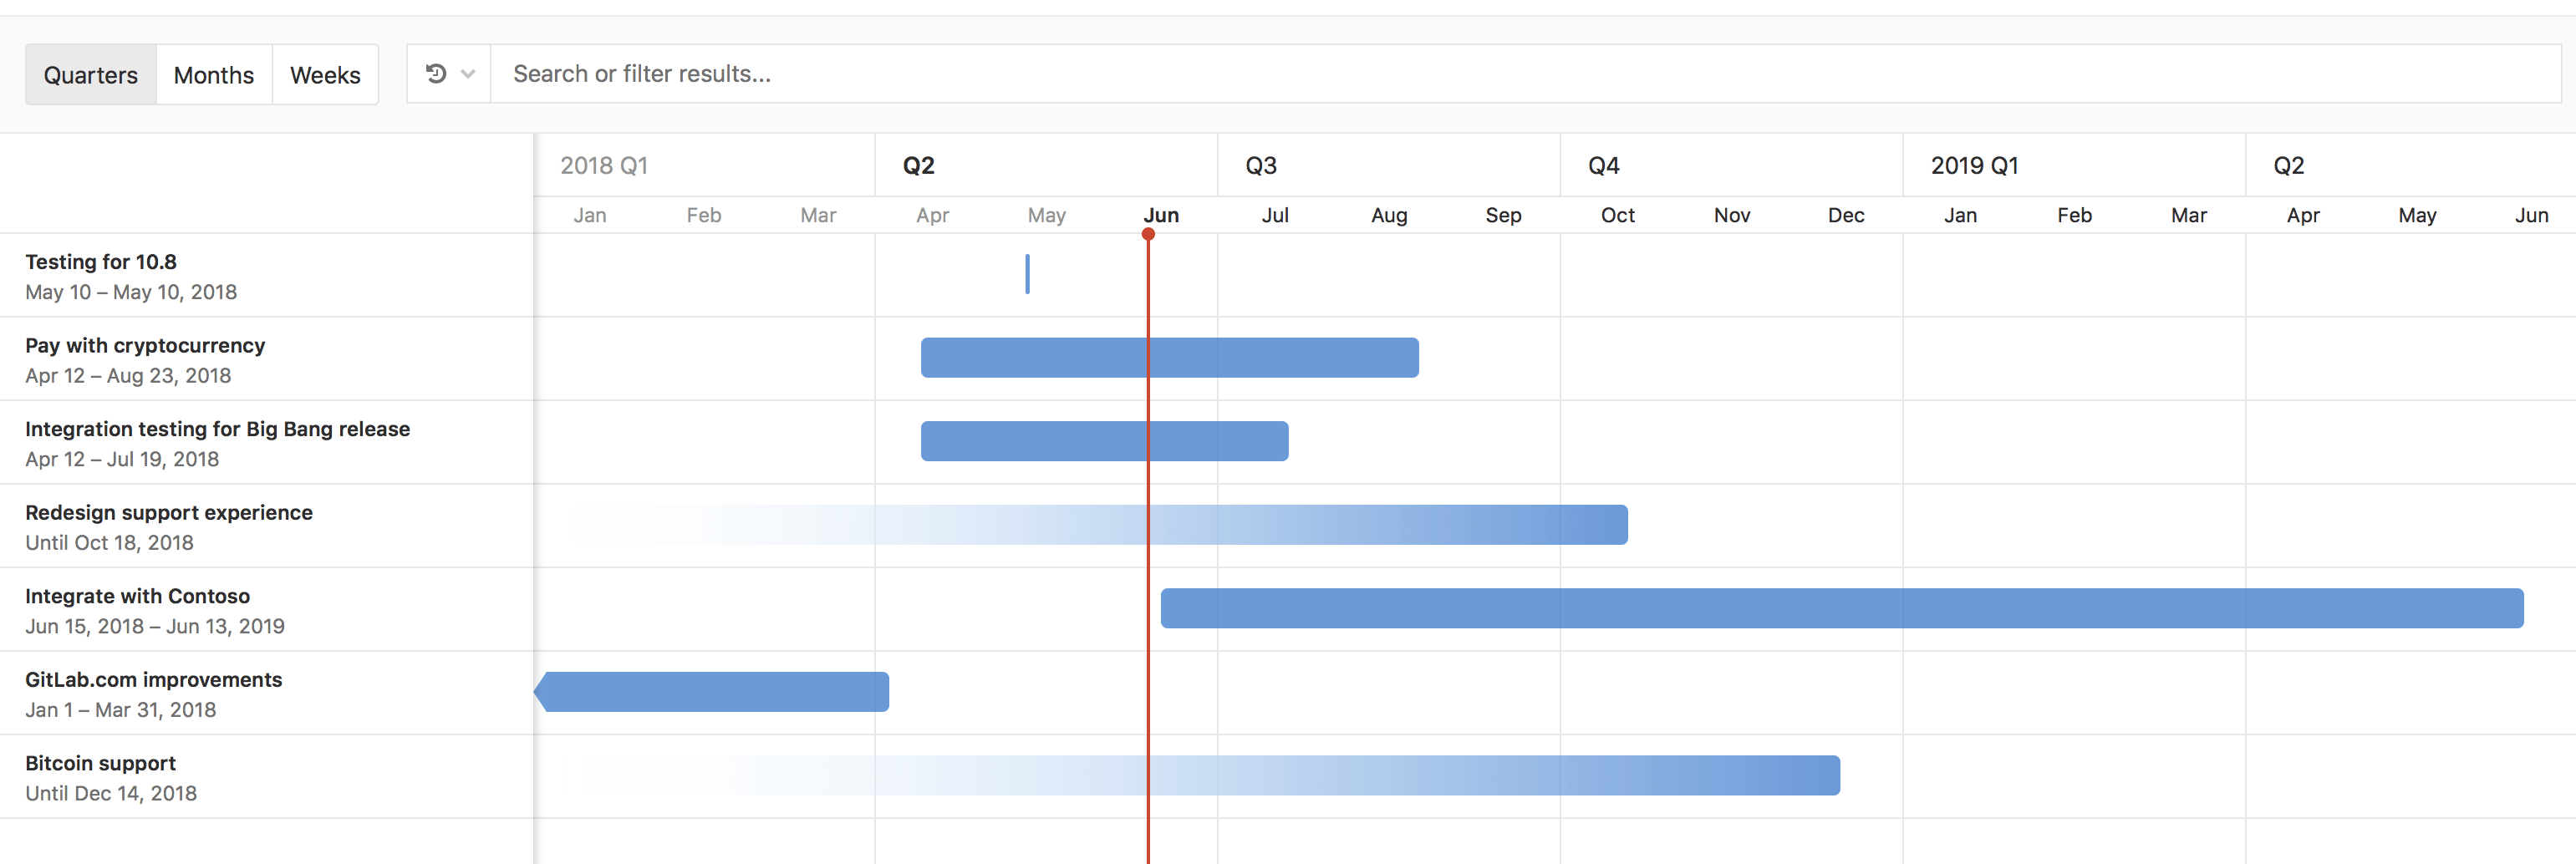 Roadmap date ranges